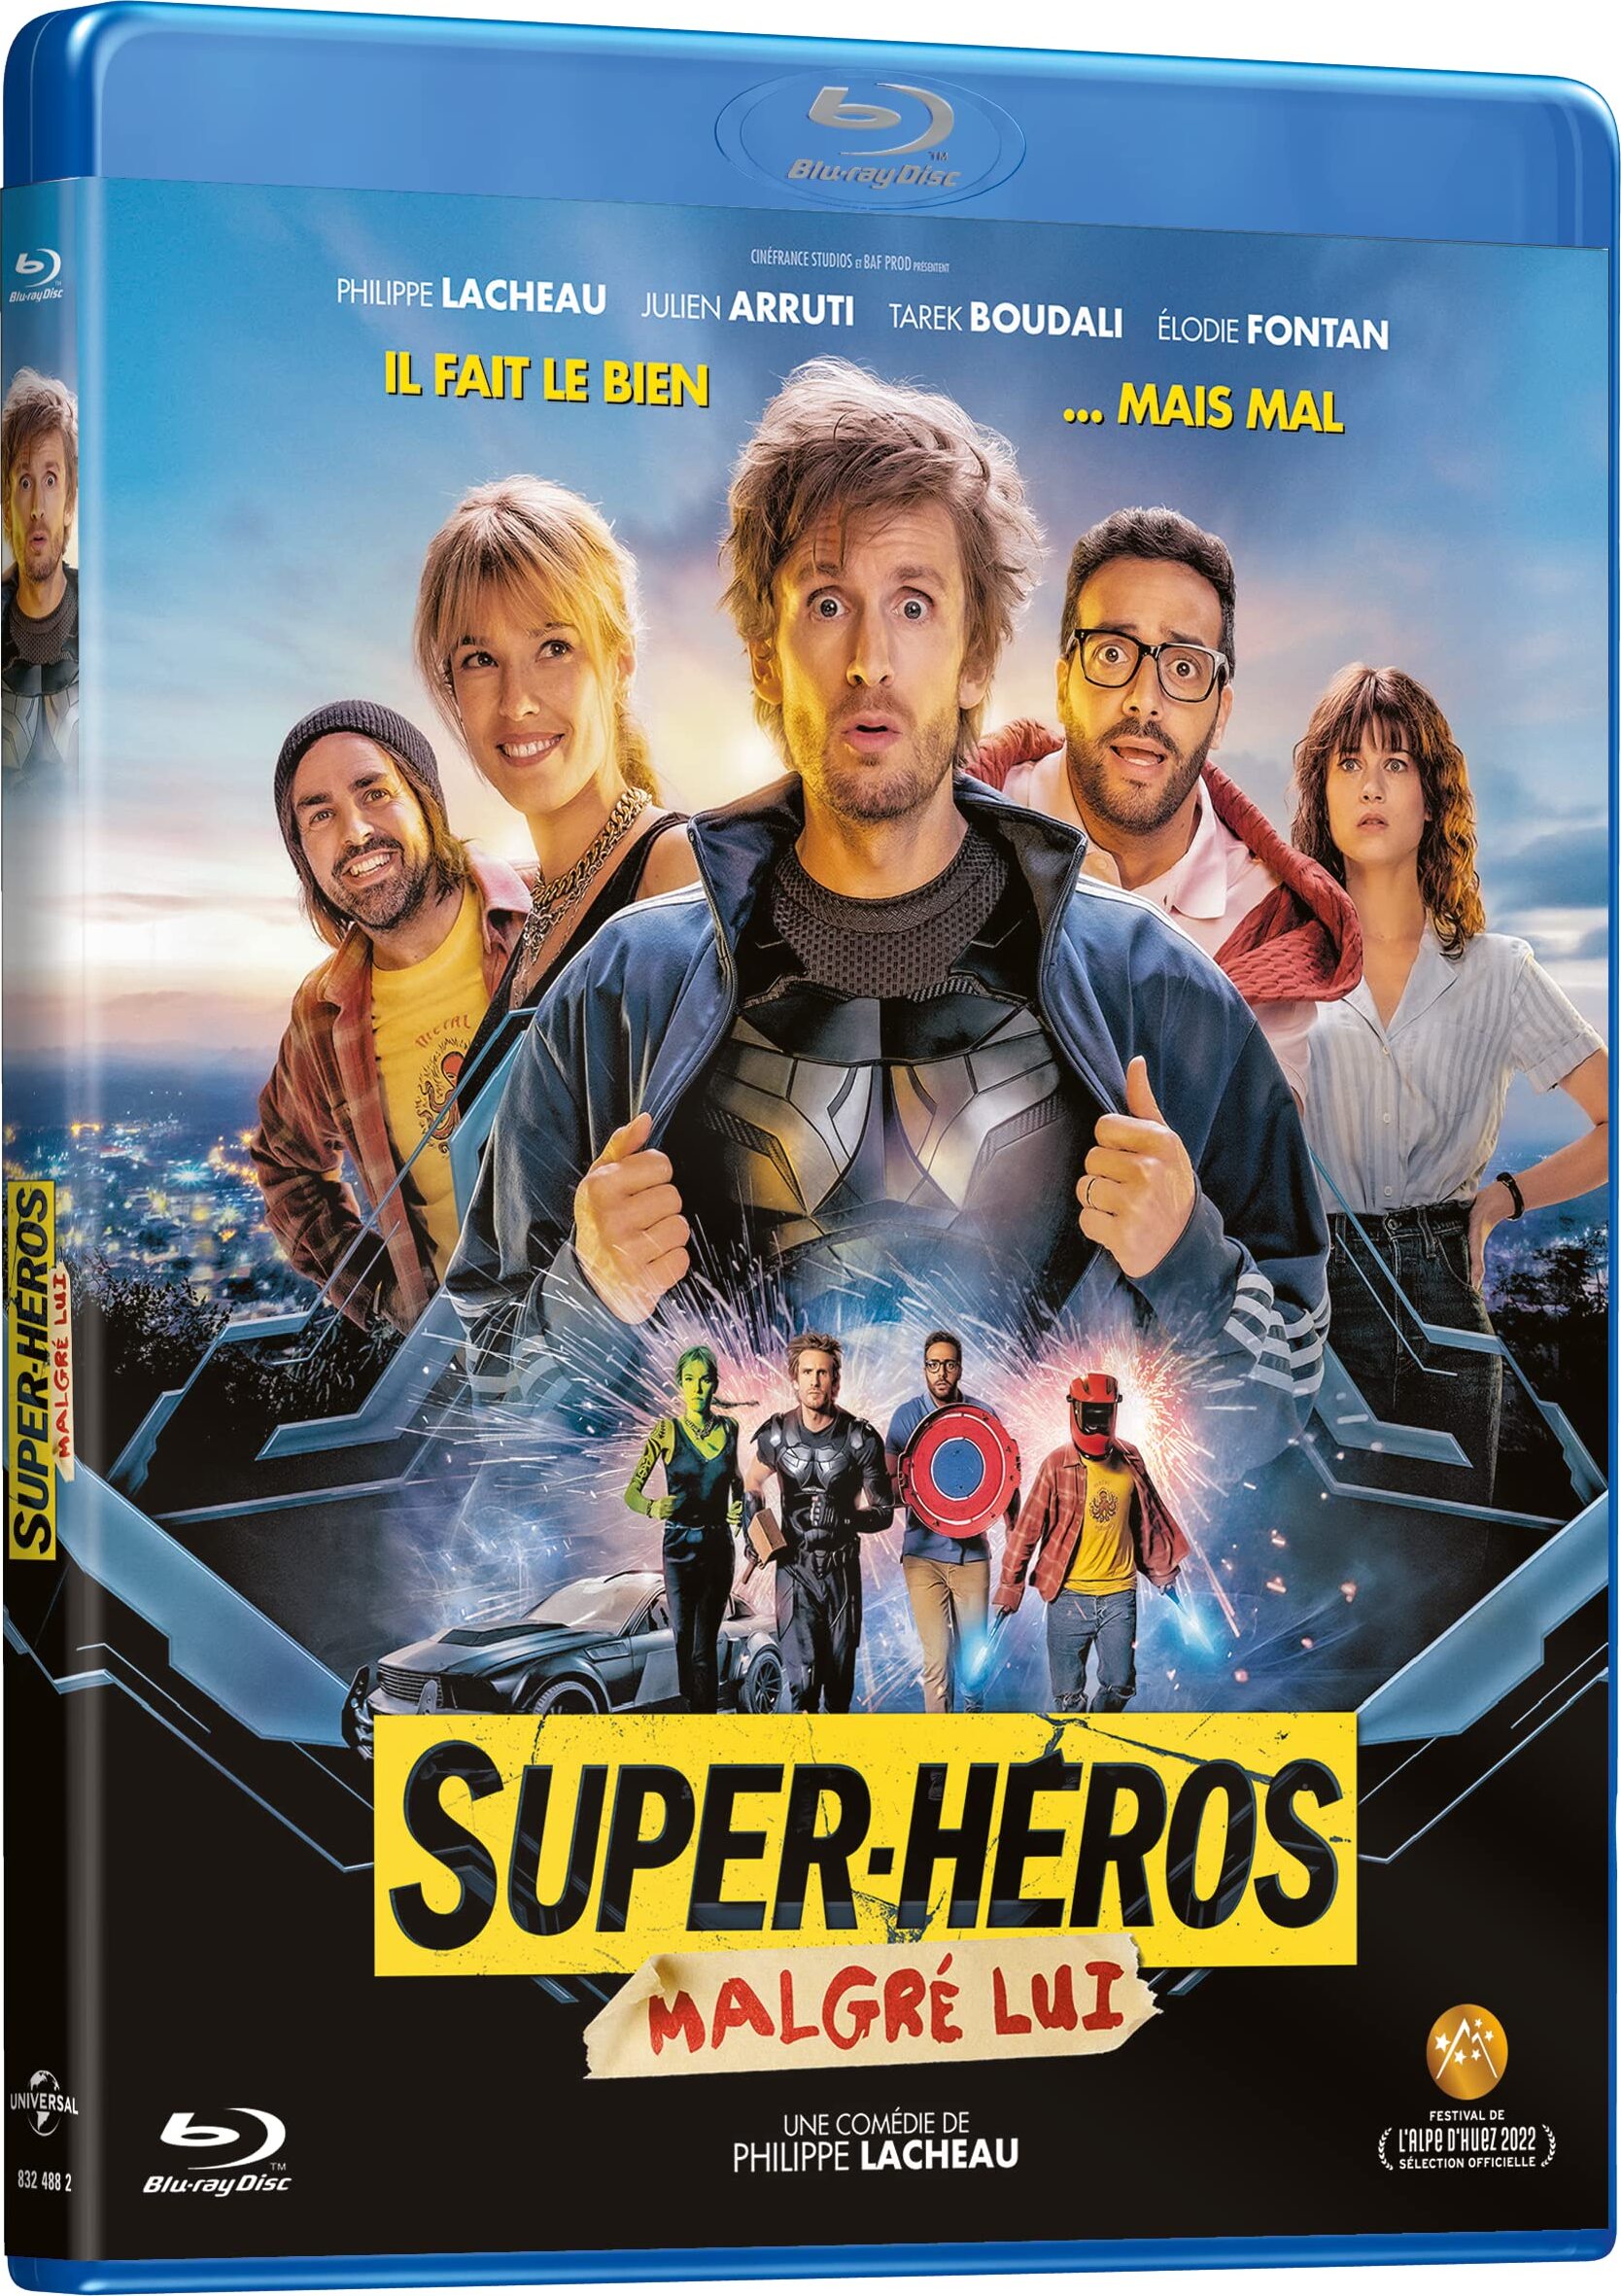 Superwho? (2021) - IMDb